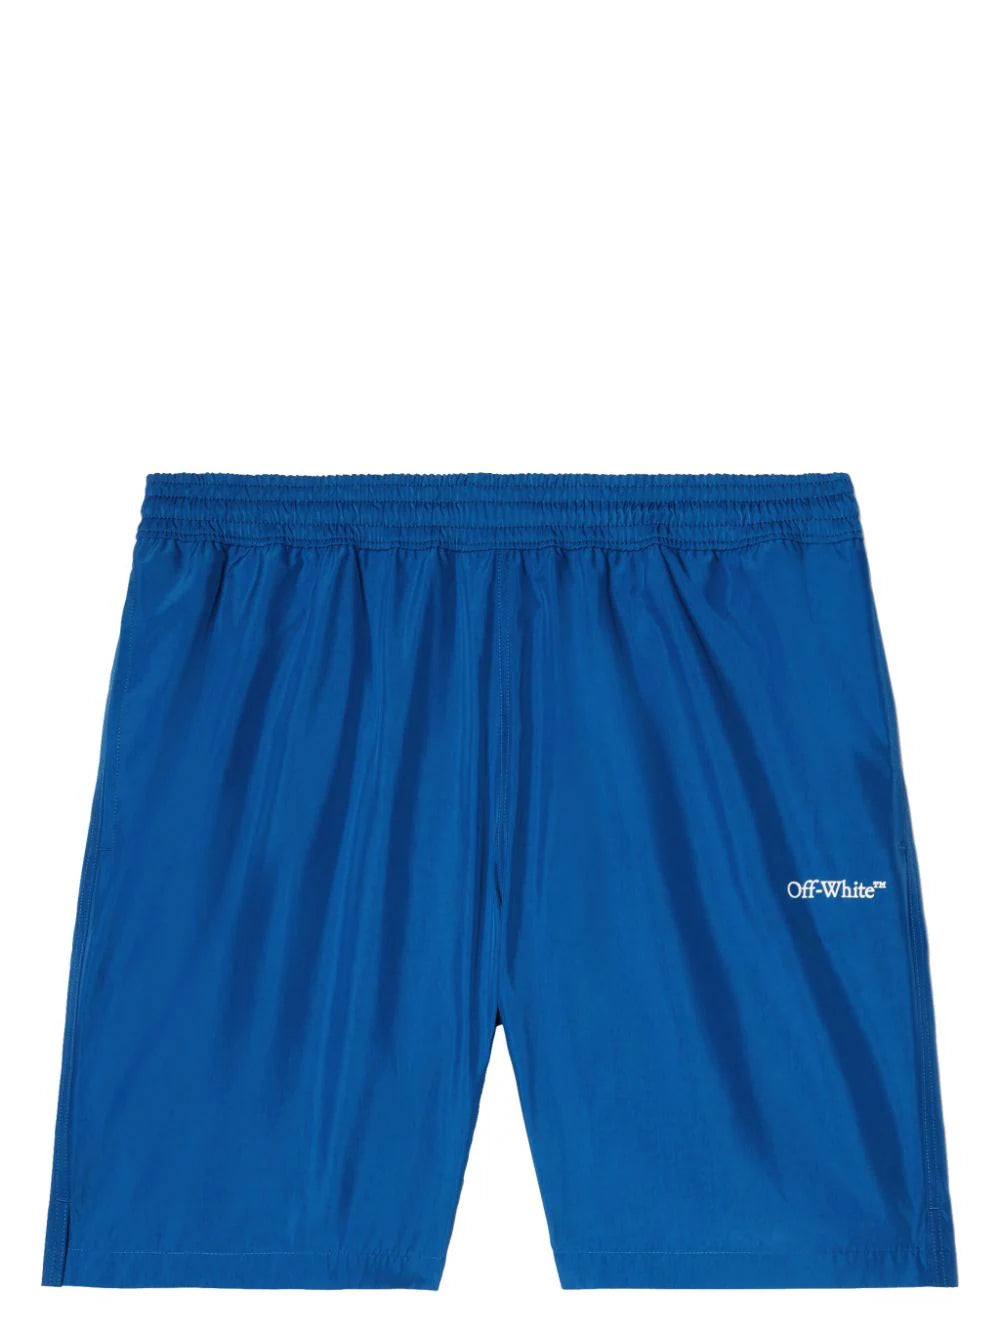 Arrows-print swim shorts